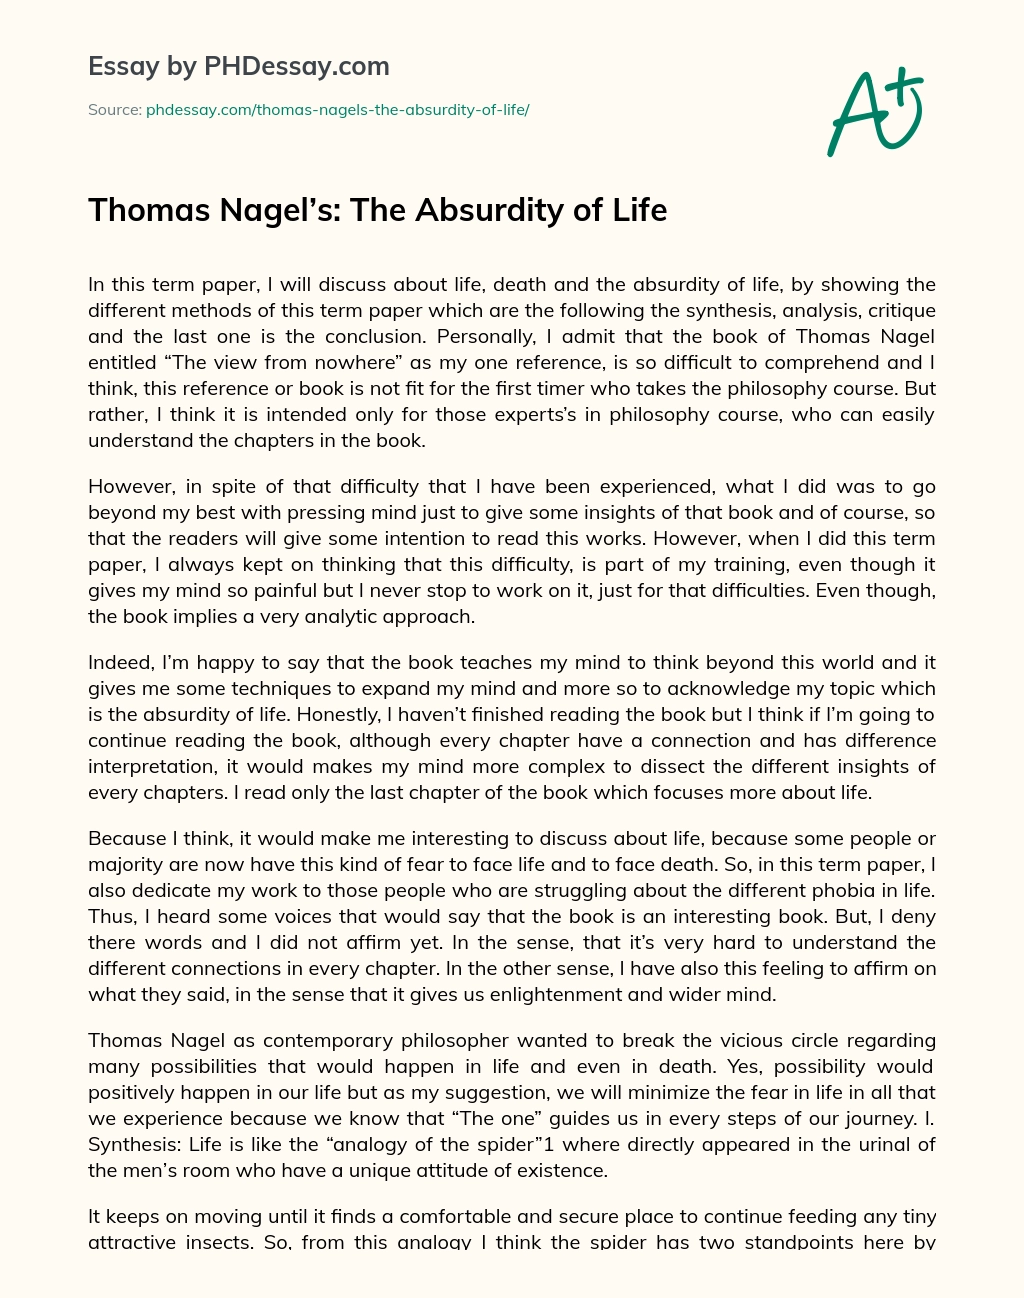 Thomas Nagel’s: The Absurdity of Life essay